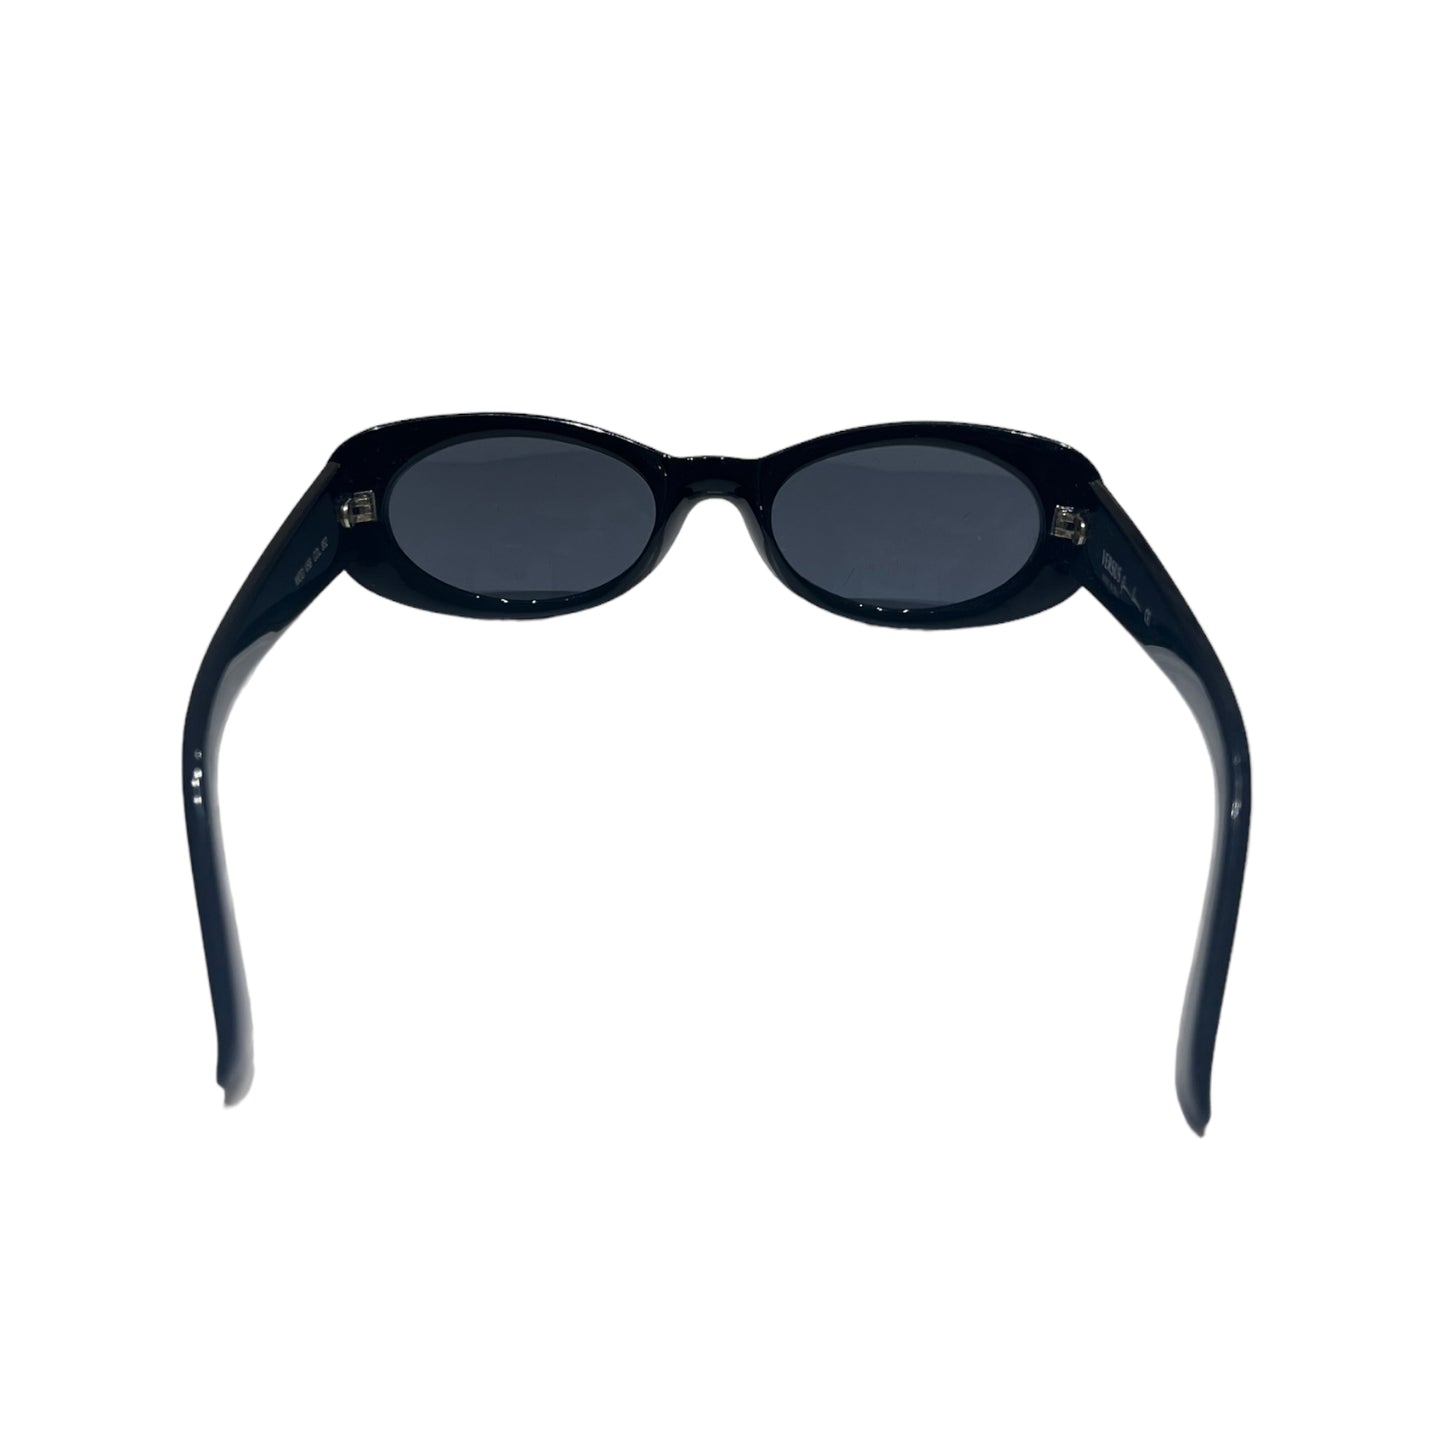 Versus Versace Black Sunglasses